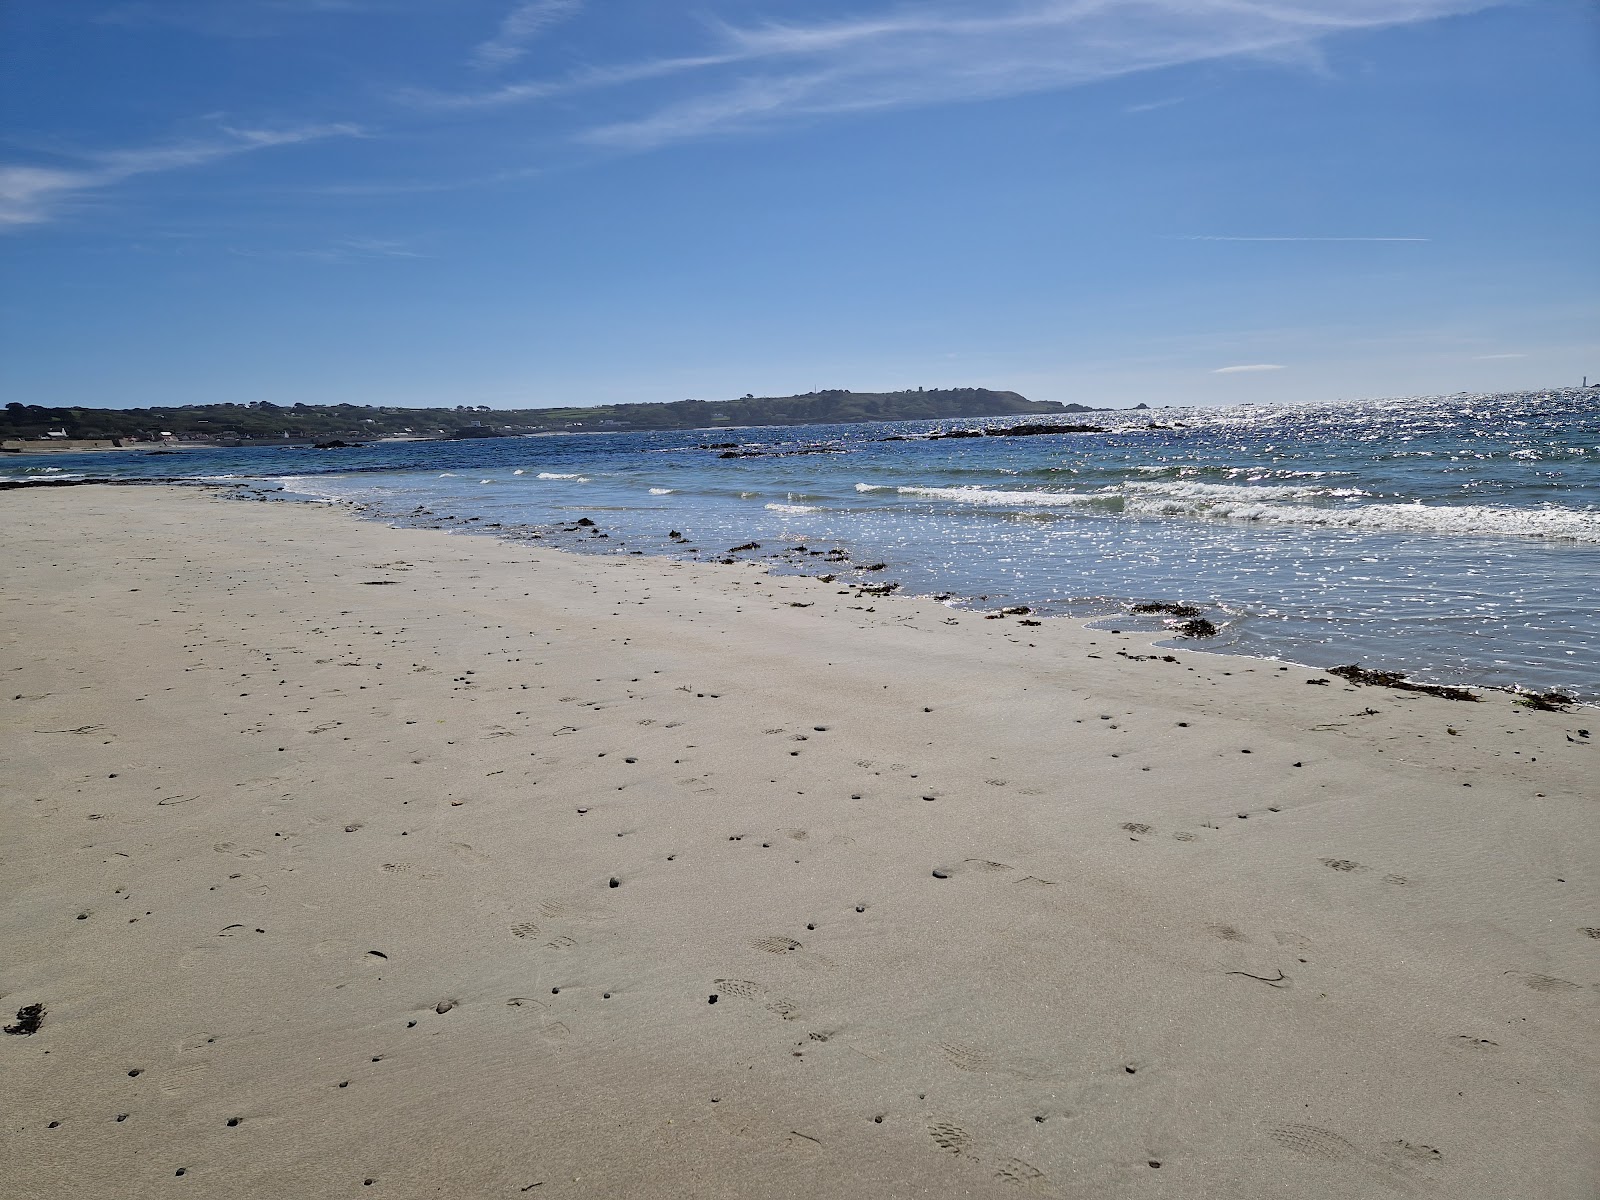 Fotografie cu L'Eree Beach - locul popular printre cunoscătorii de relaxare